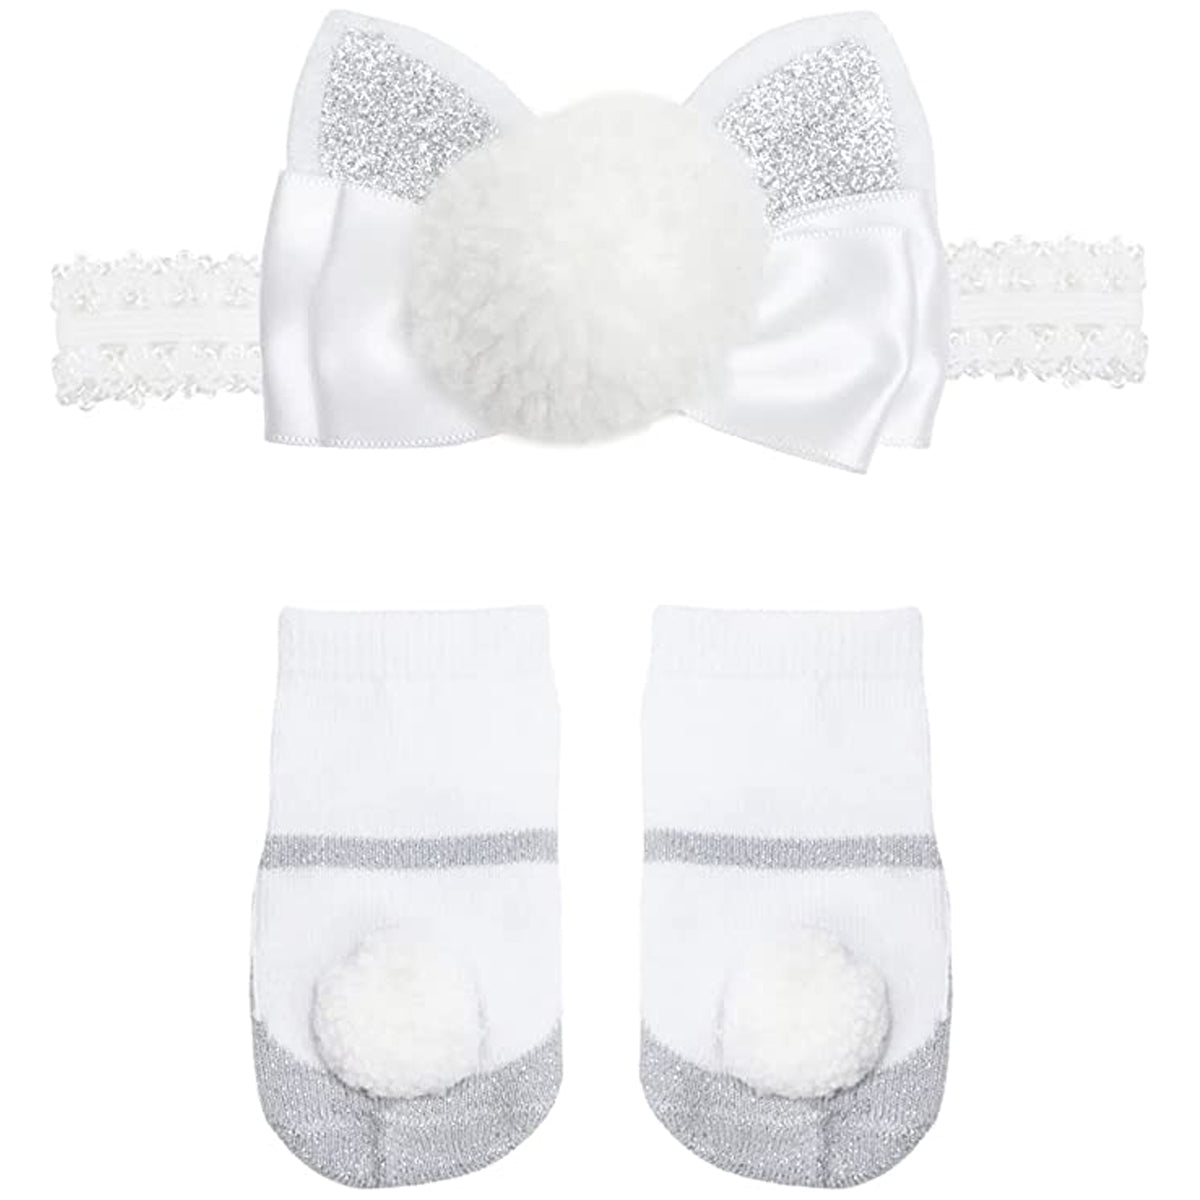 2pc Robeez Baby Girl Accessories Set – Headband, Socks, 0-12M